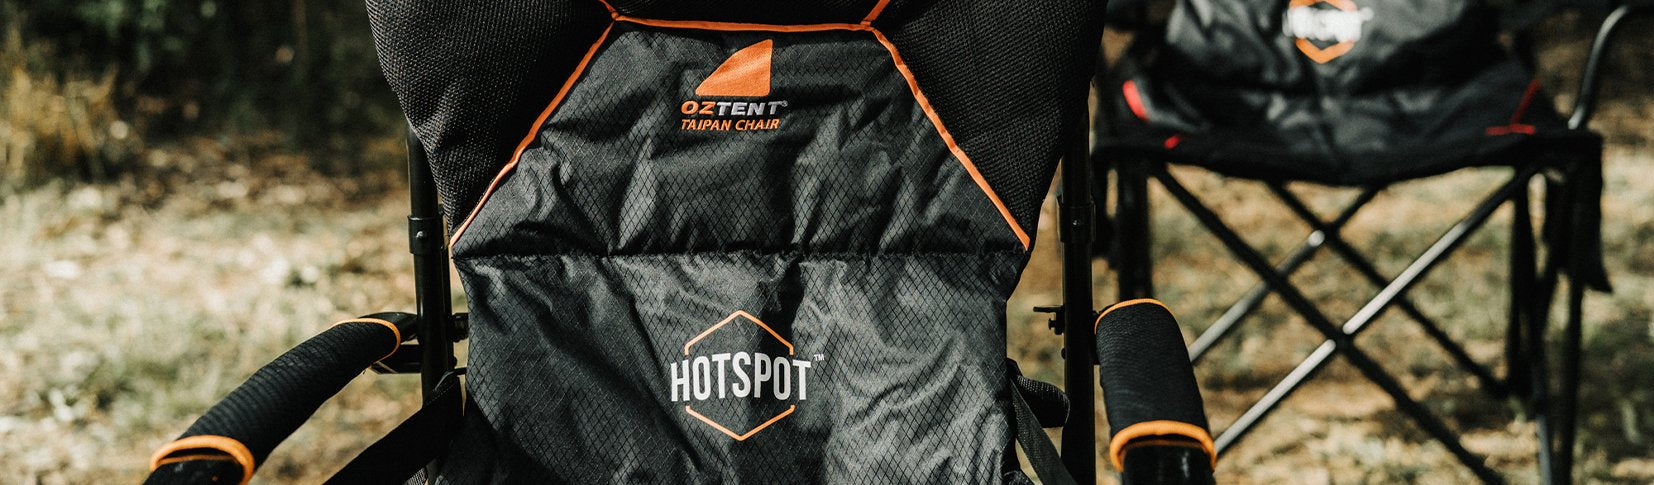 Oztent Taipan HotSpot™ Chair